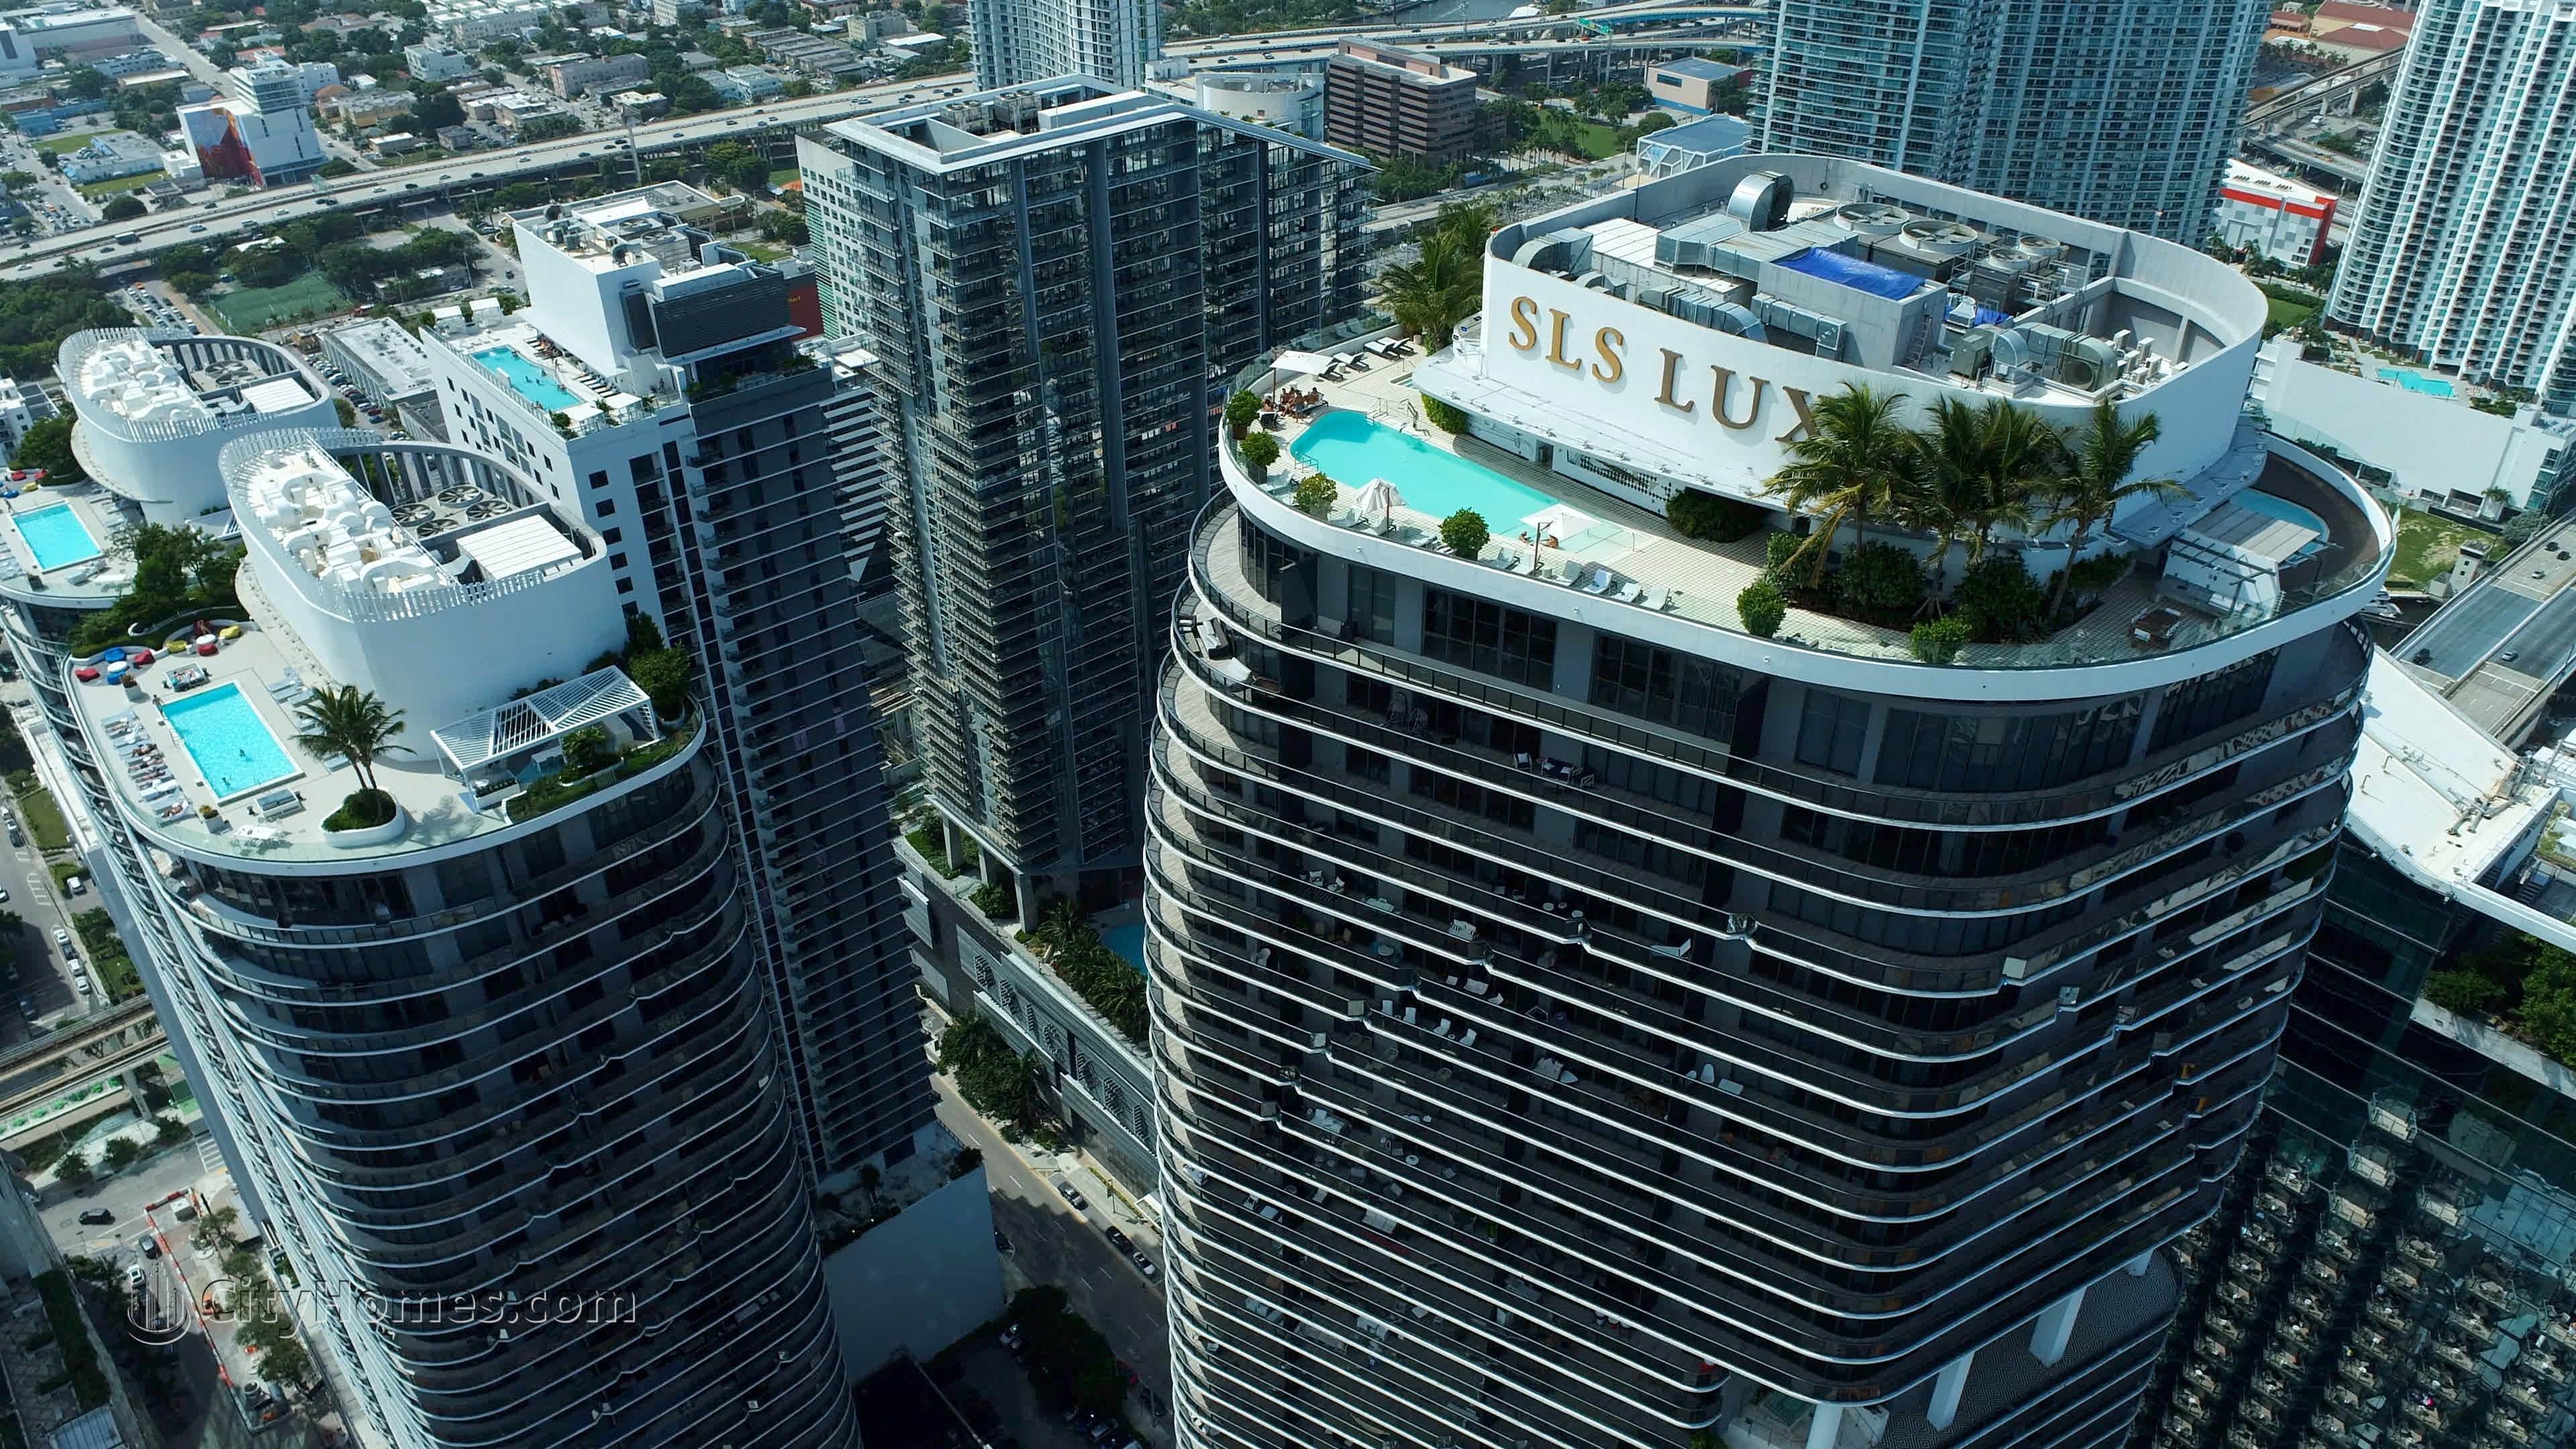 3. SLS Lux edificio en 801 S Miami Avenue, Miami, FL 33139